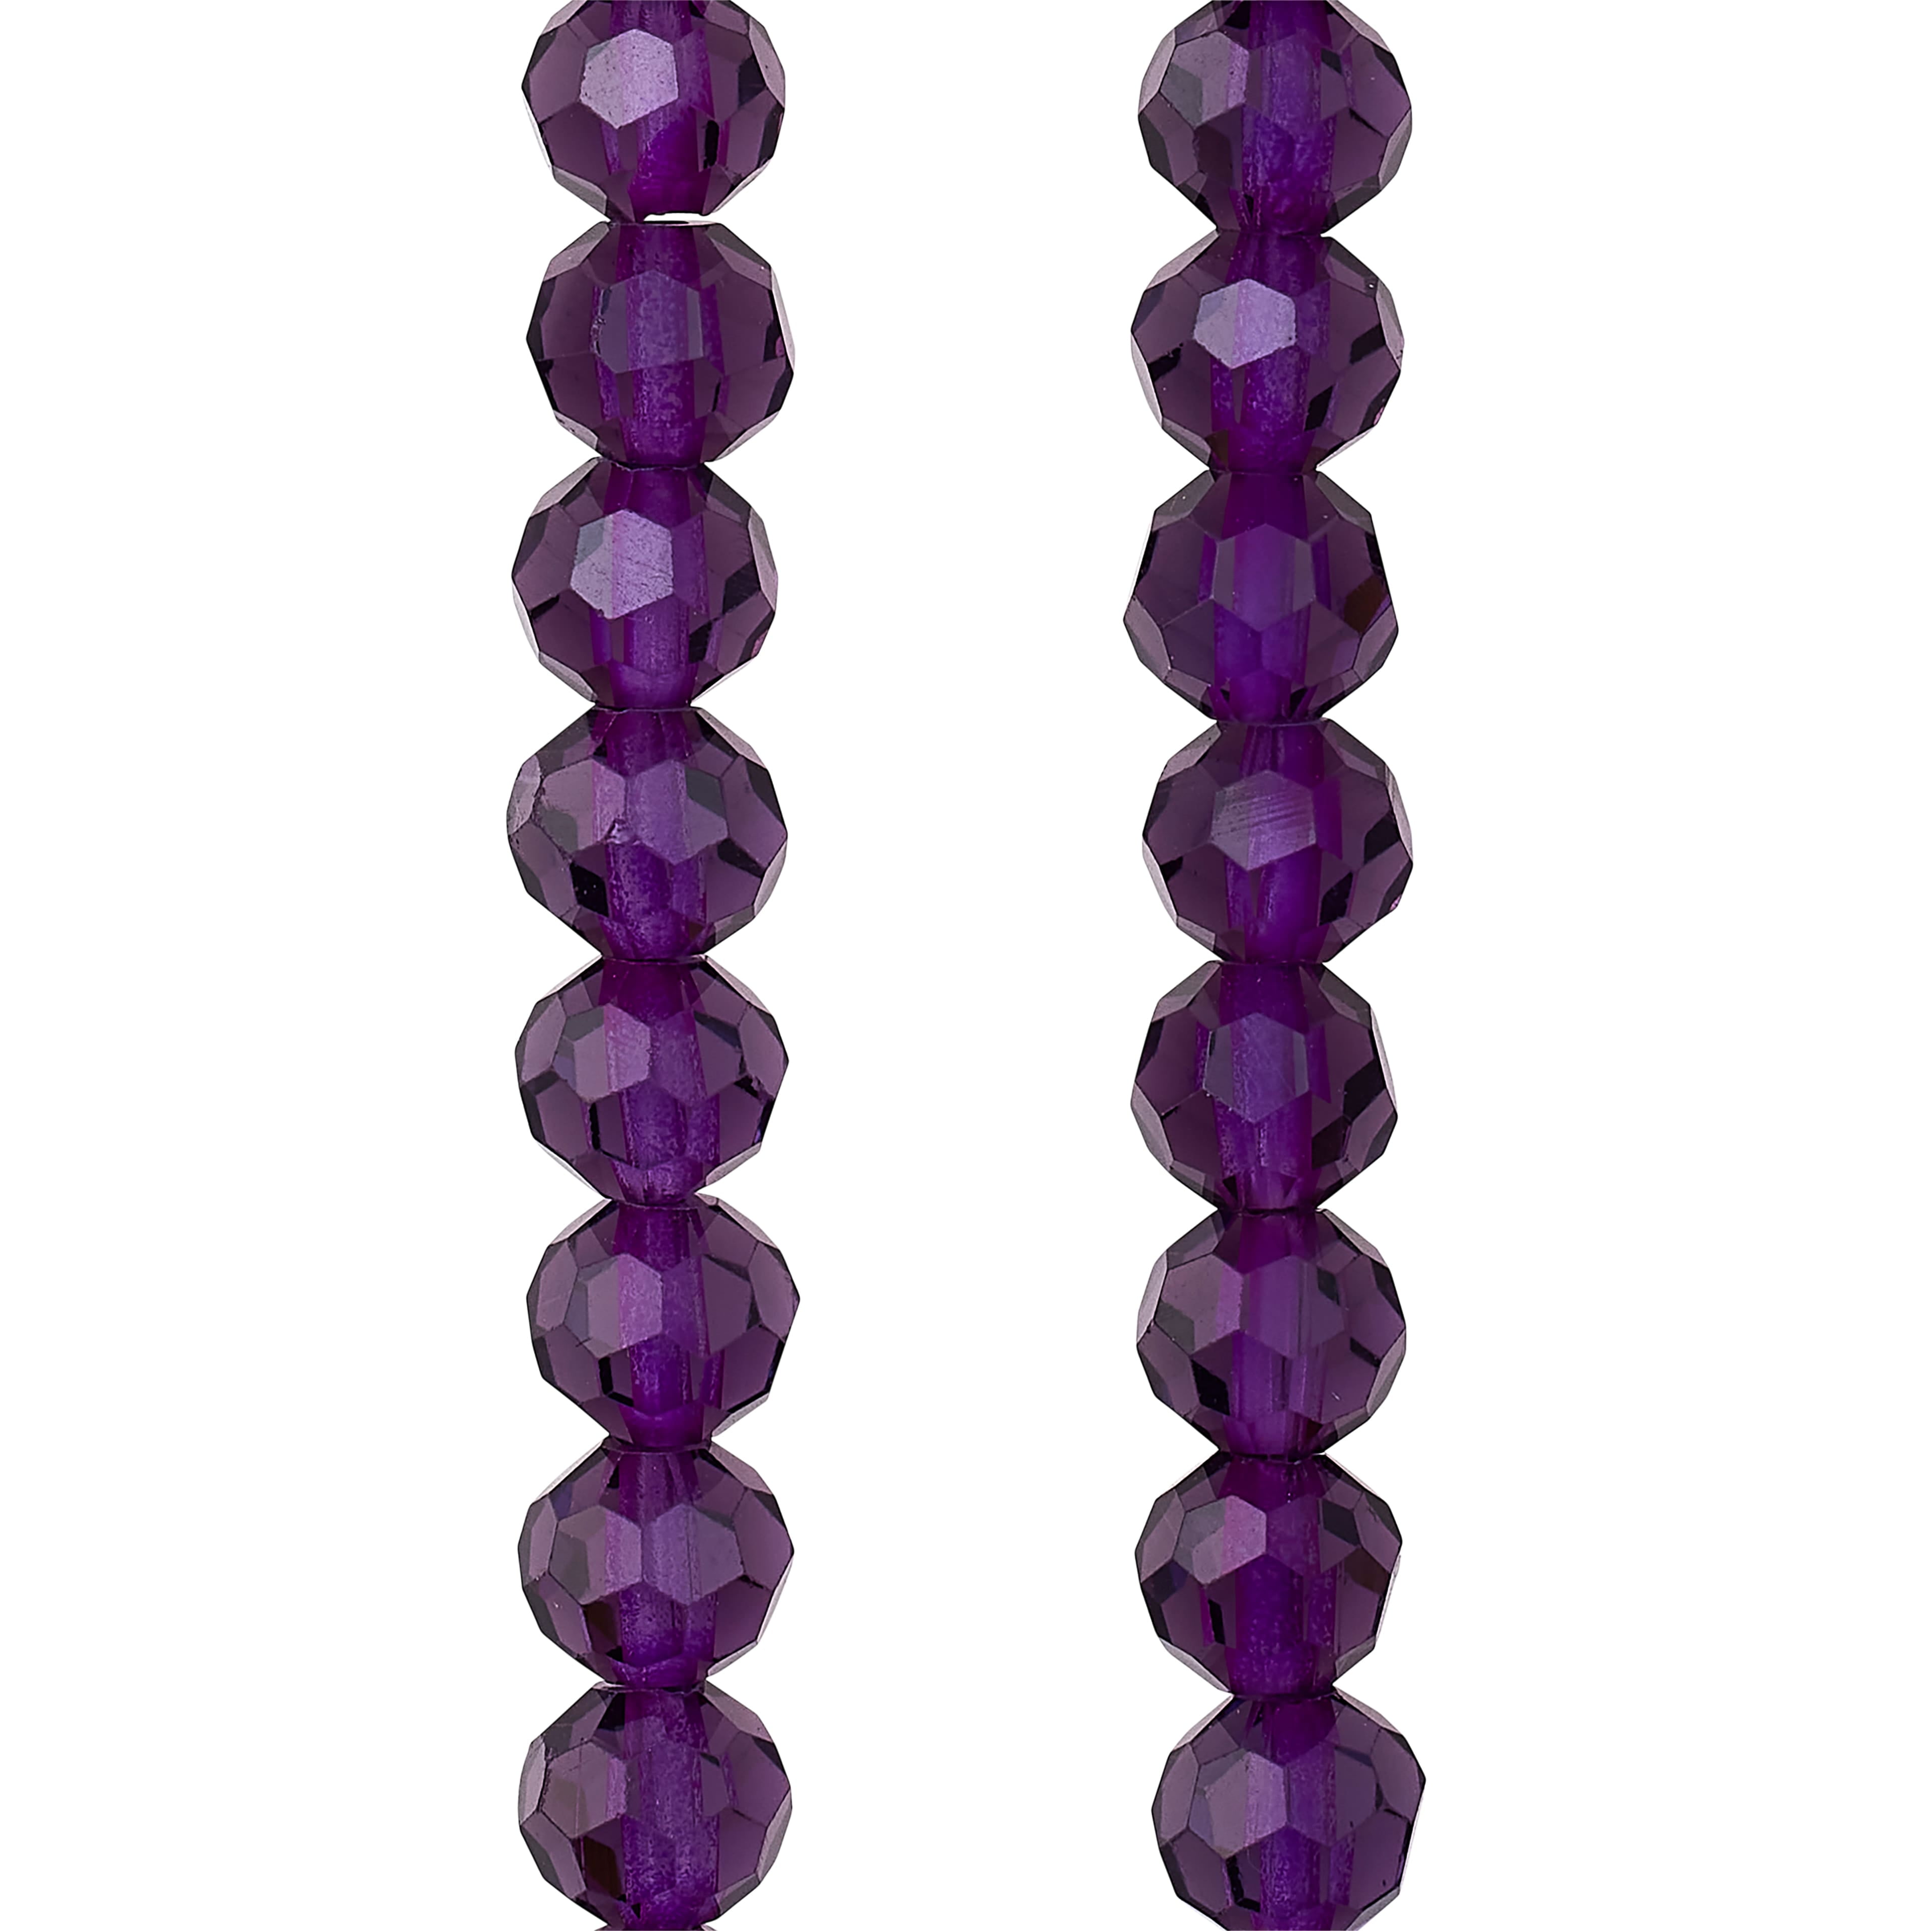 6mm Glass Flower Beads - Blue Lavender AB - 30 beads